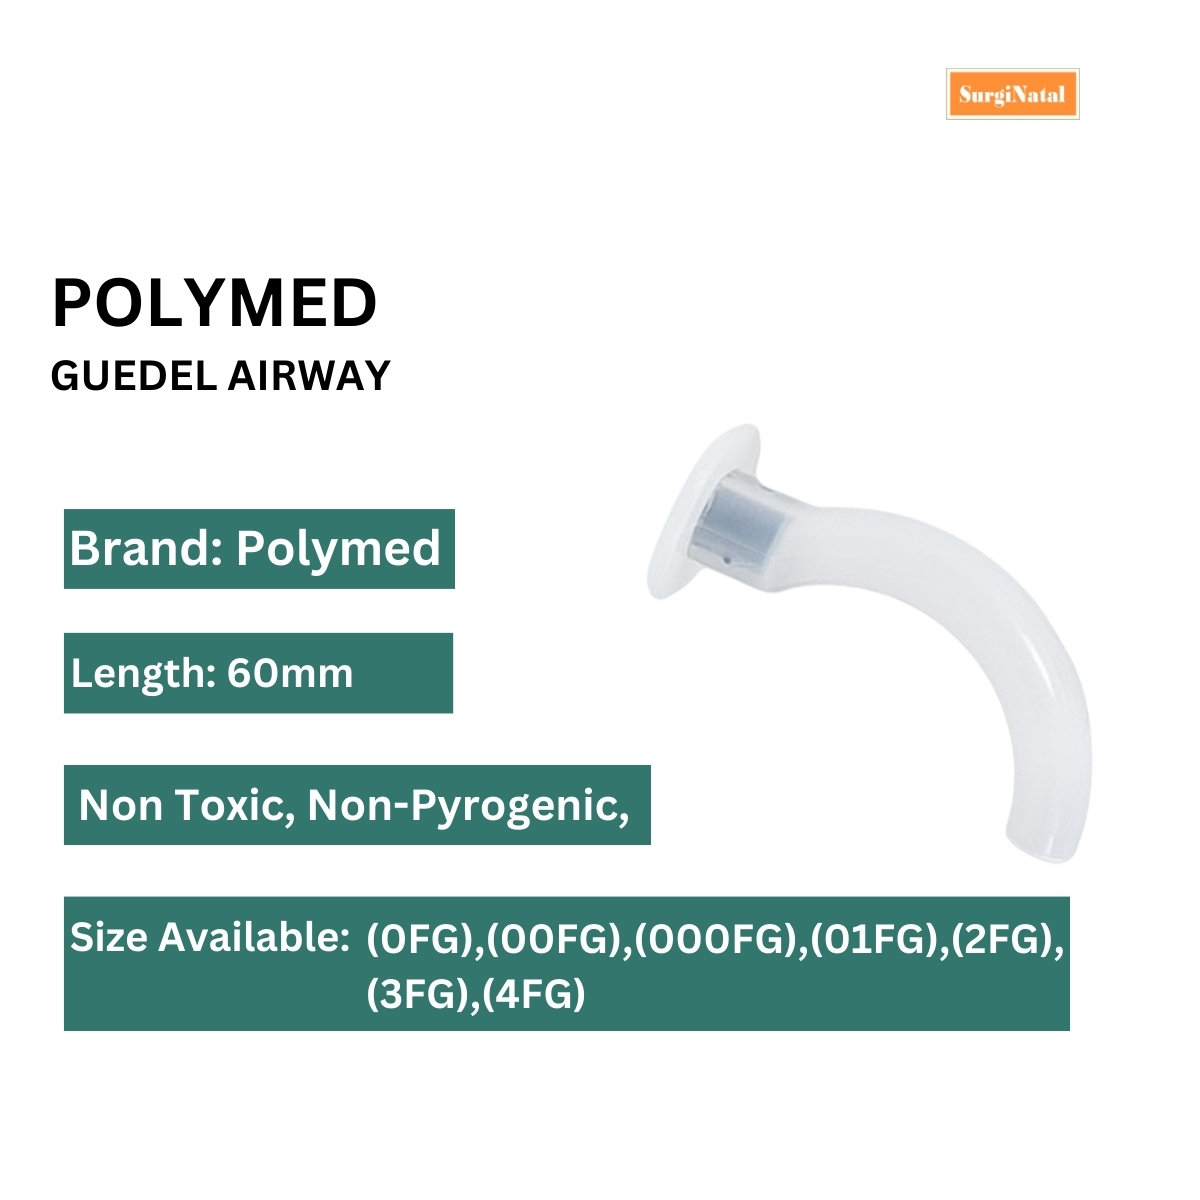 polymed guedel airway